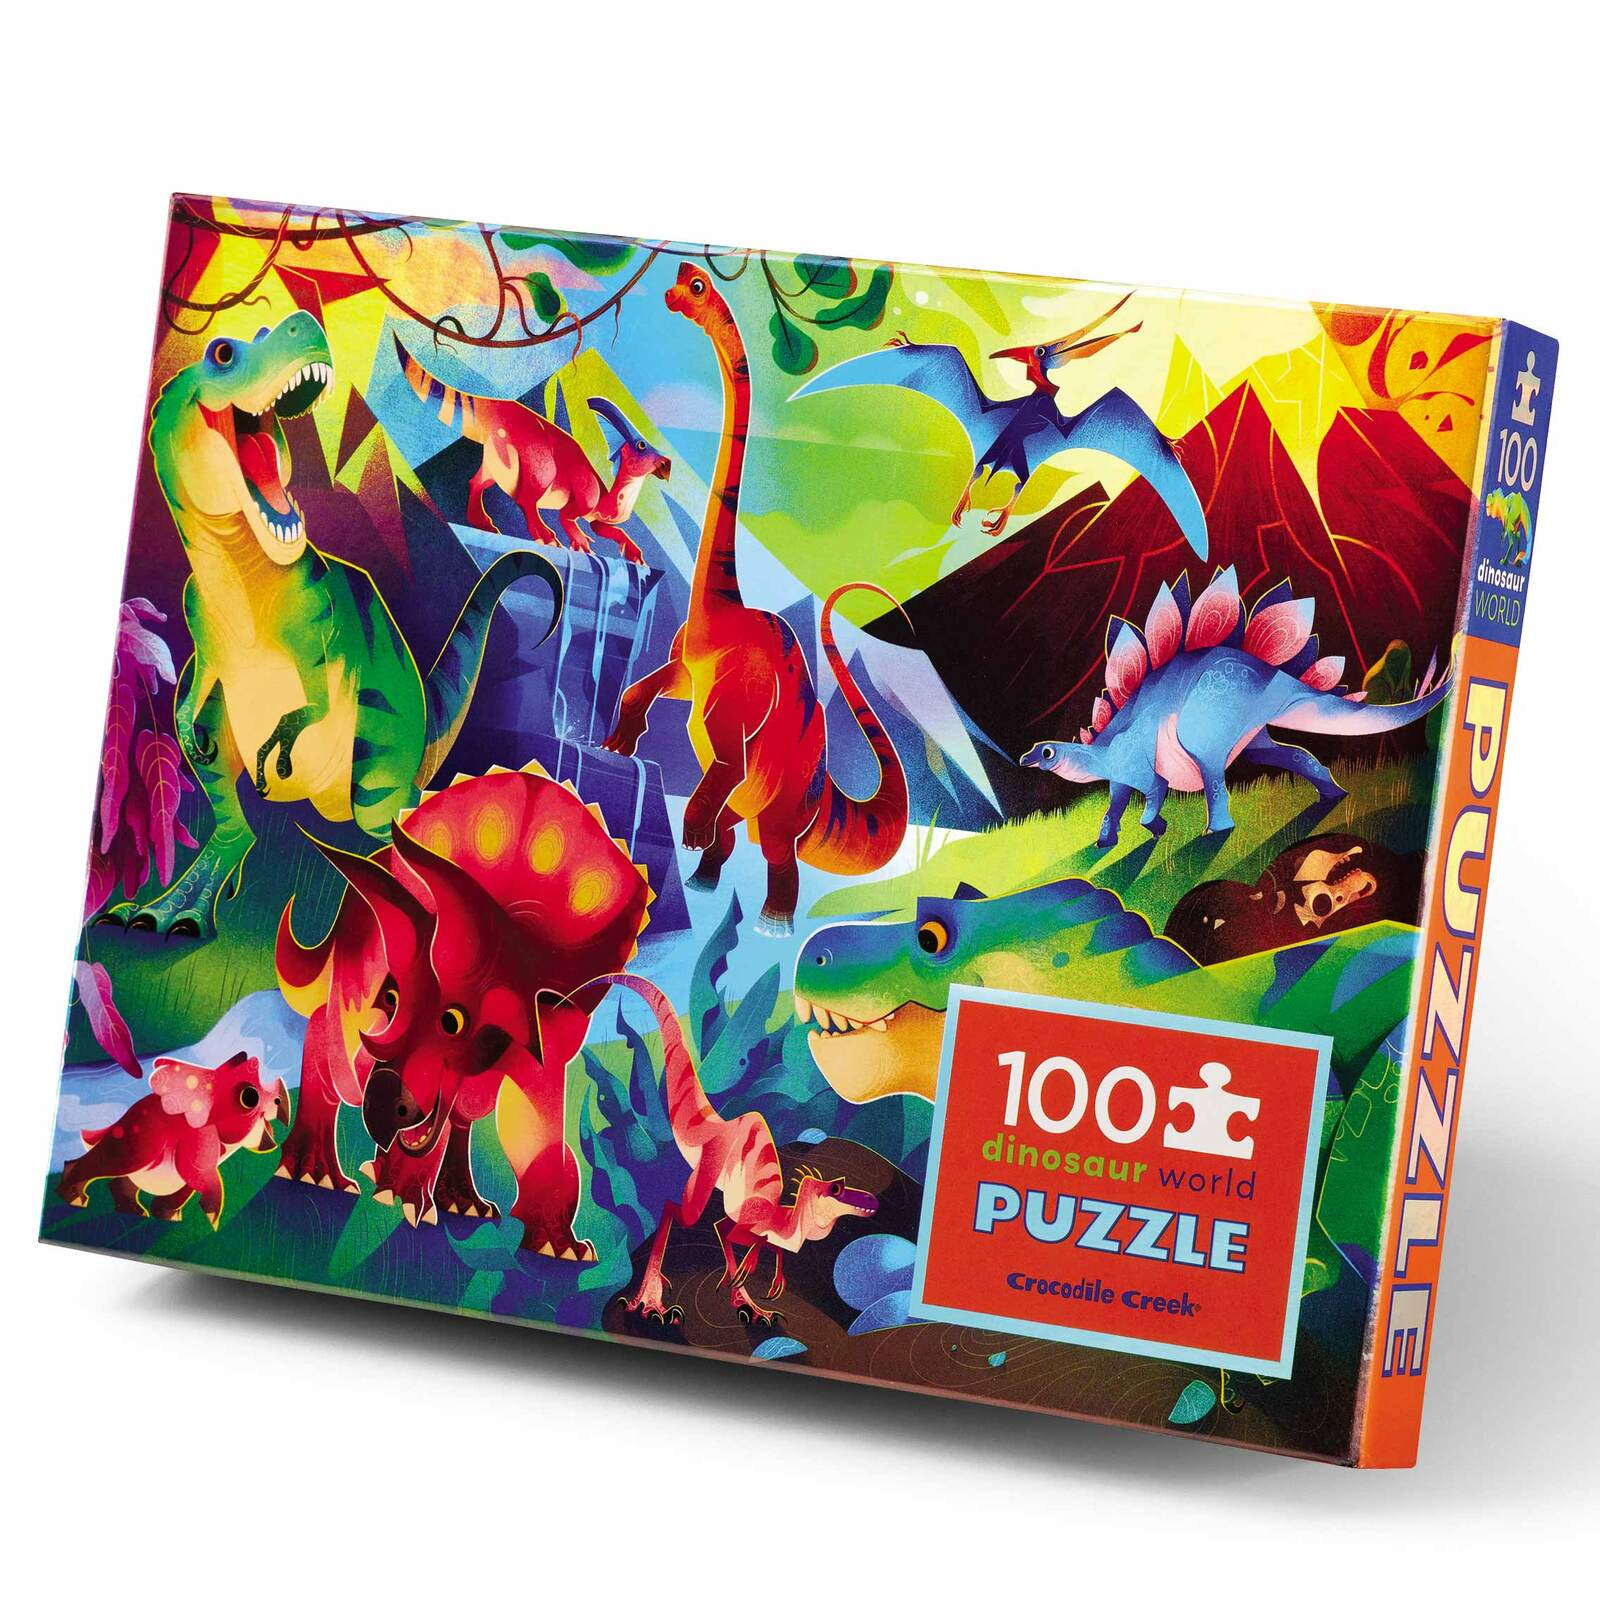 HOLOGRAPHIC PUZZLE 100PC - DINOSAUR WORLD